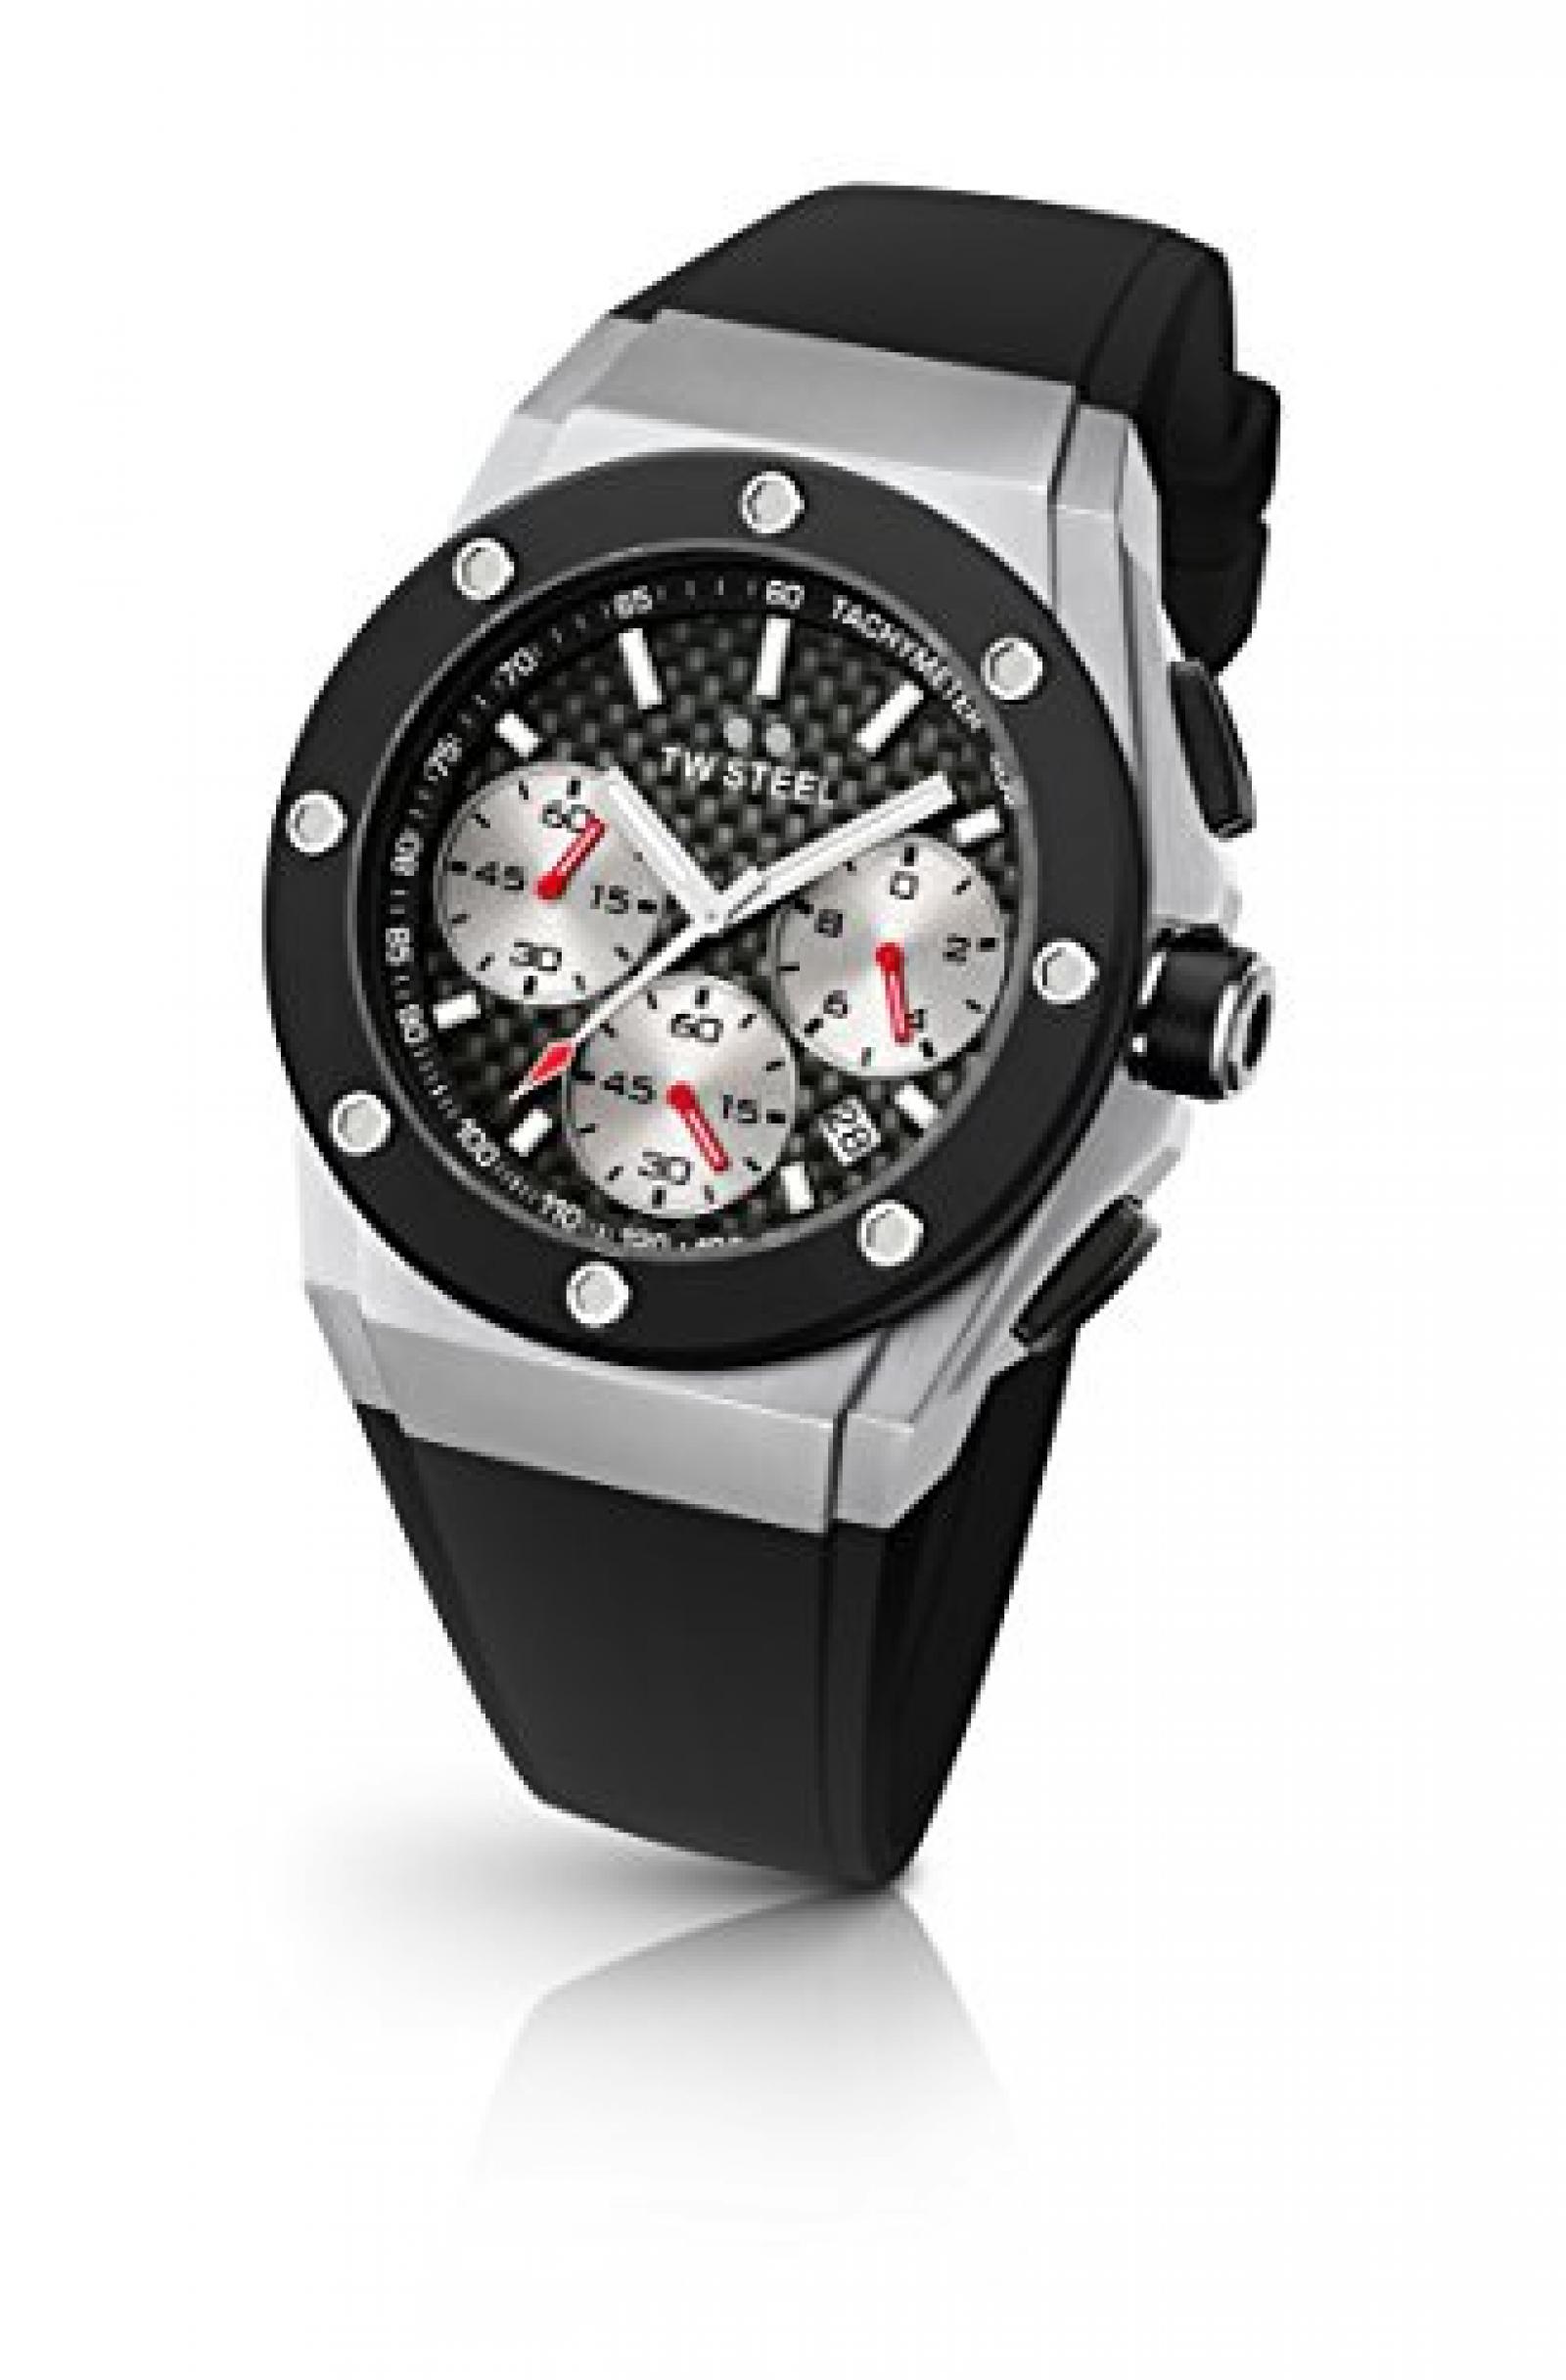 TW Steel Unisex-Armbanduhr CEO Tech David Coulthard Edition Chronograph Silikon Schwarz CE4019 